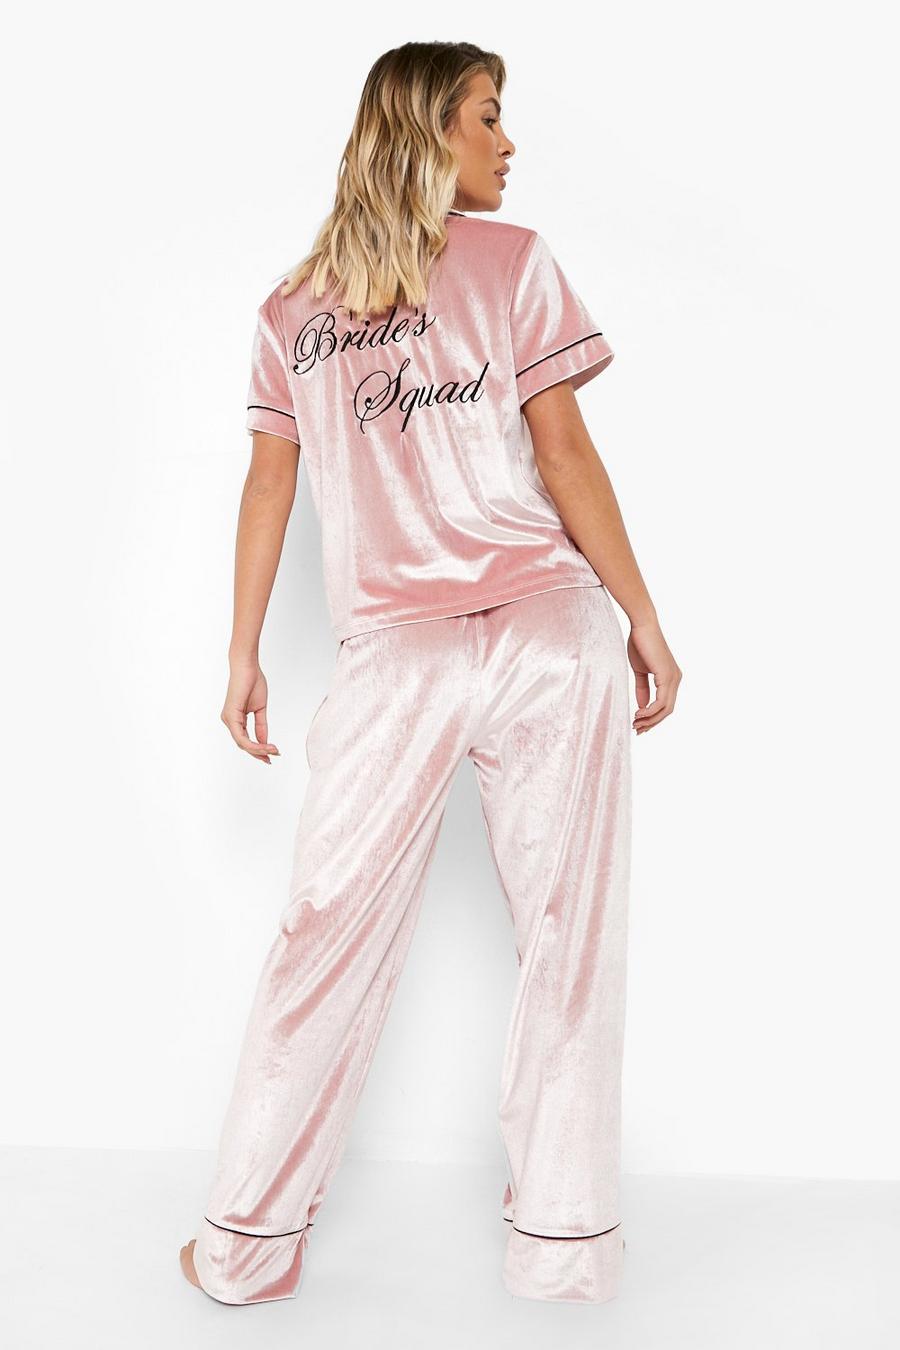 Samt Pyjama-Set mit Bride Squad Stickerei, Blush rosa image number 1